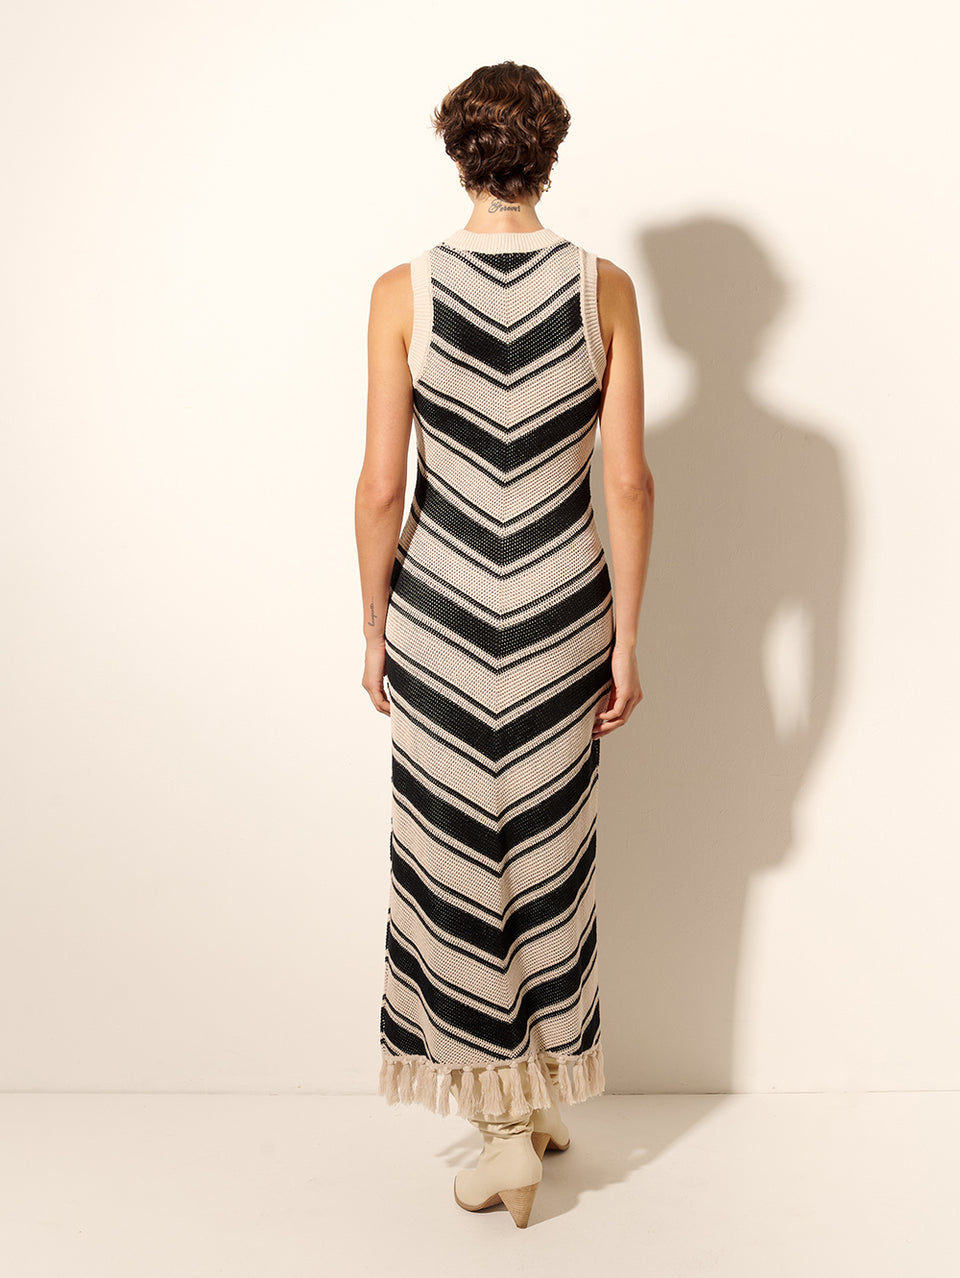 Anita Knit Midi Dress KIVARI | Model wears black and white chevron knit dress back view